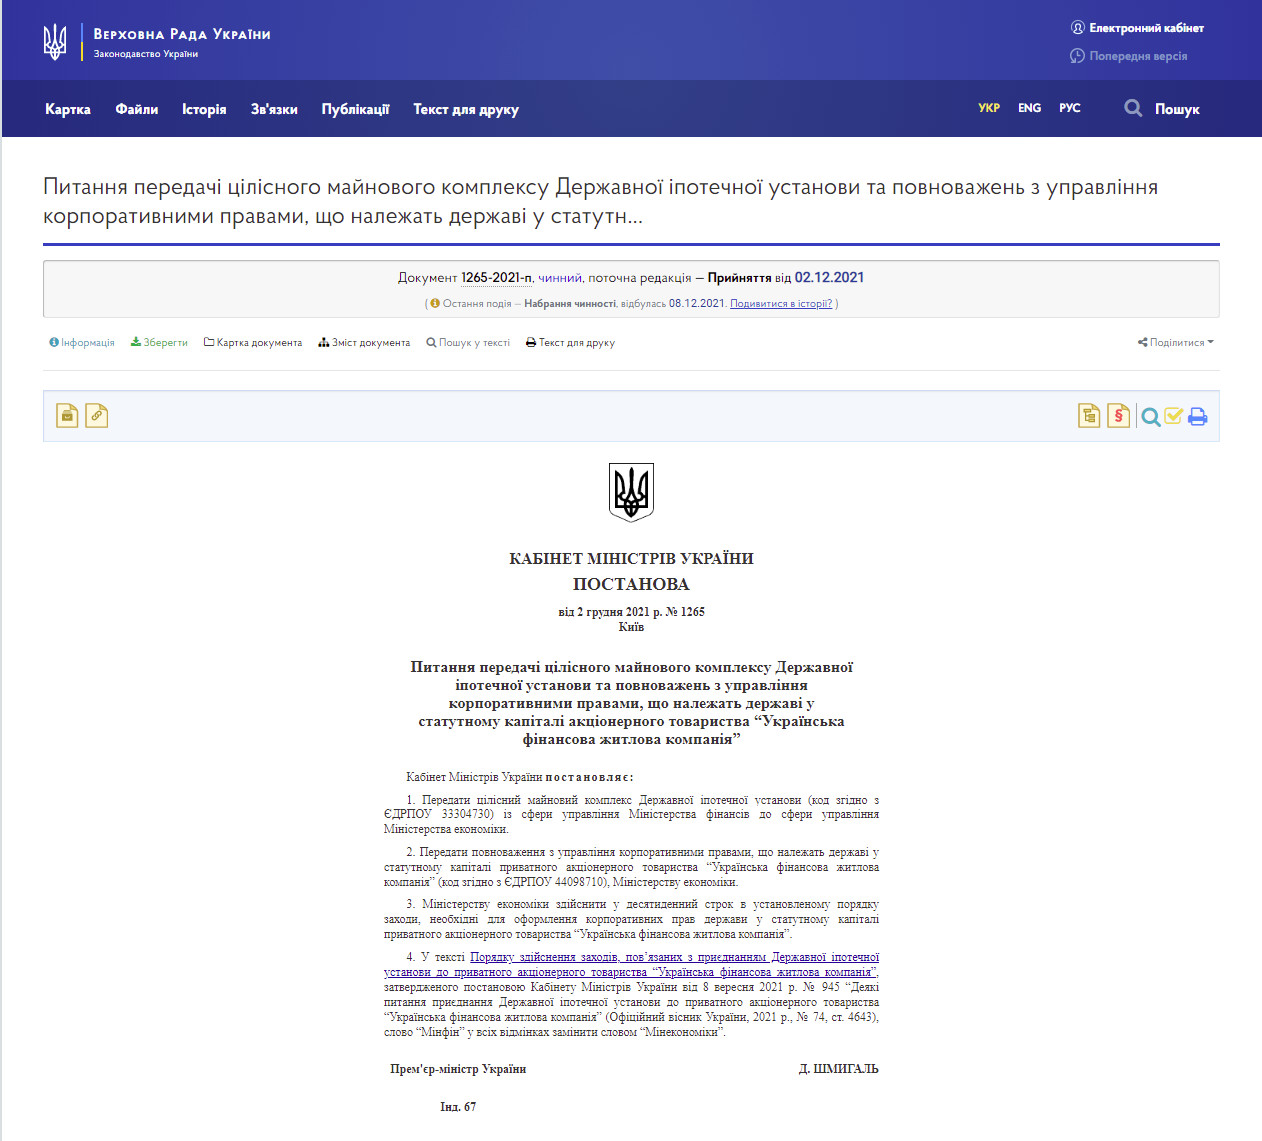 https://zakon.rada.gov.ua/laws/show/1265-2021-%D0%BF#Text